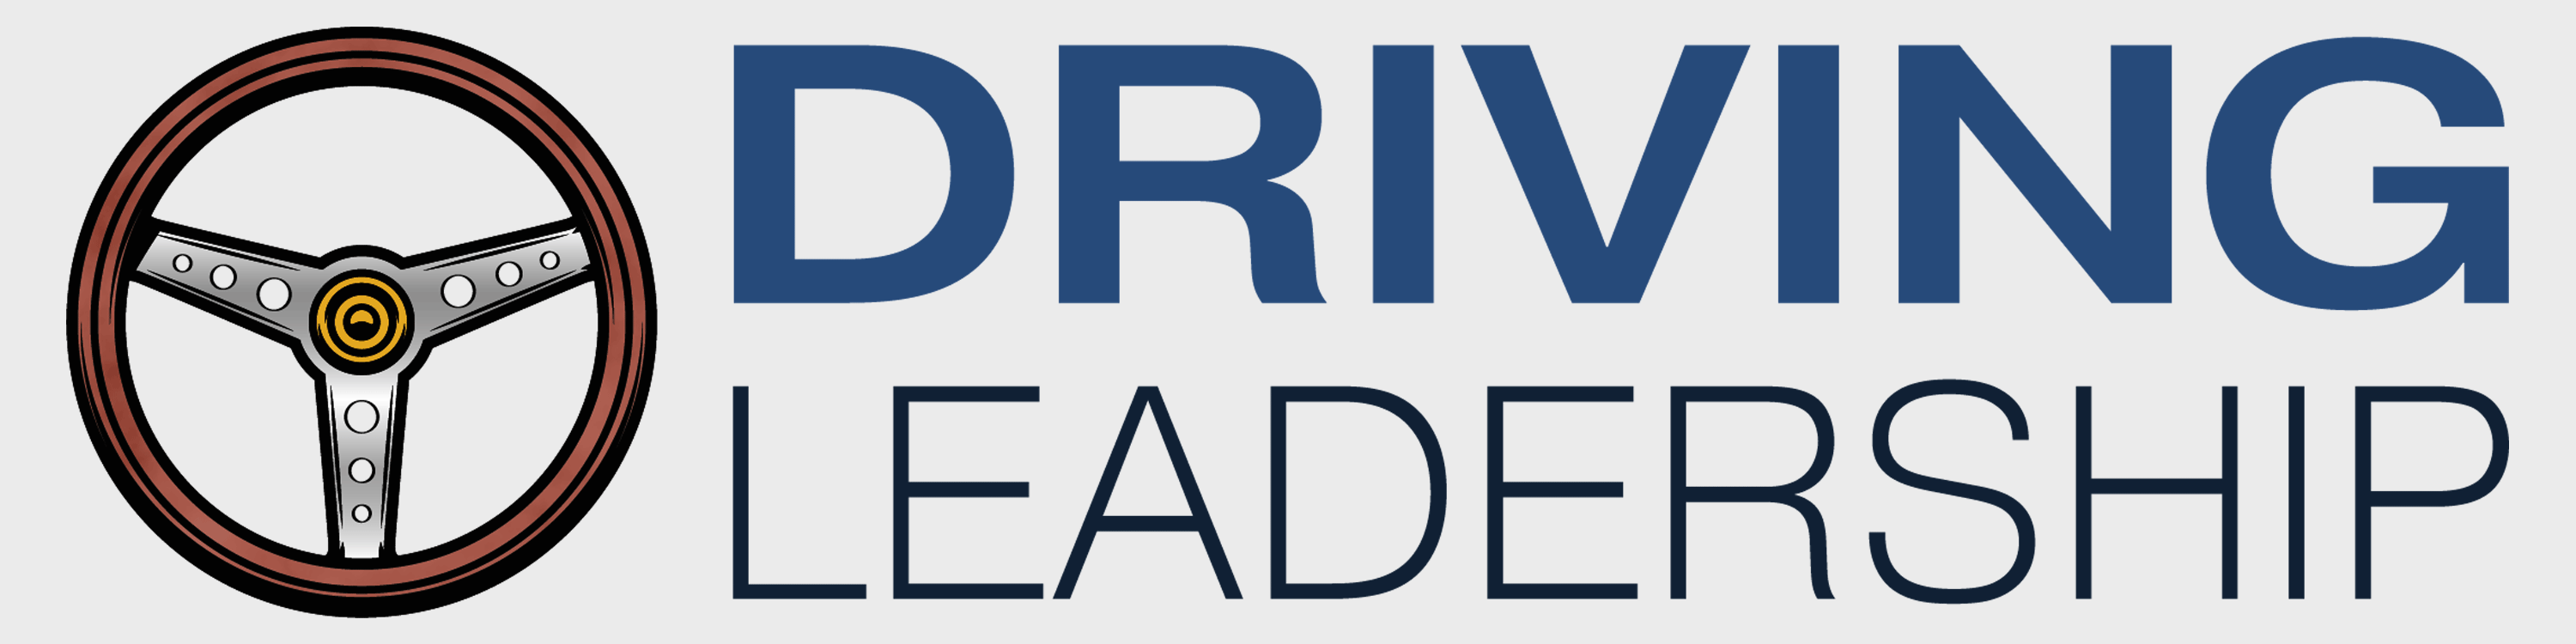 Driving Leadership